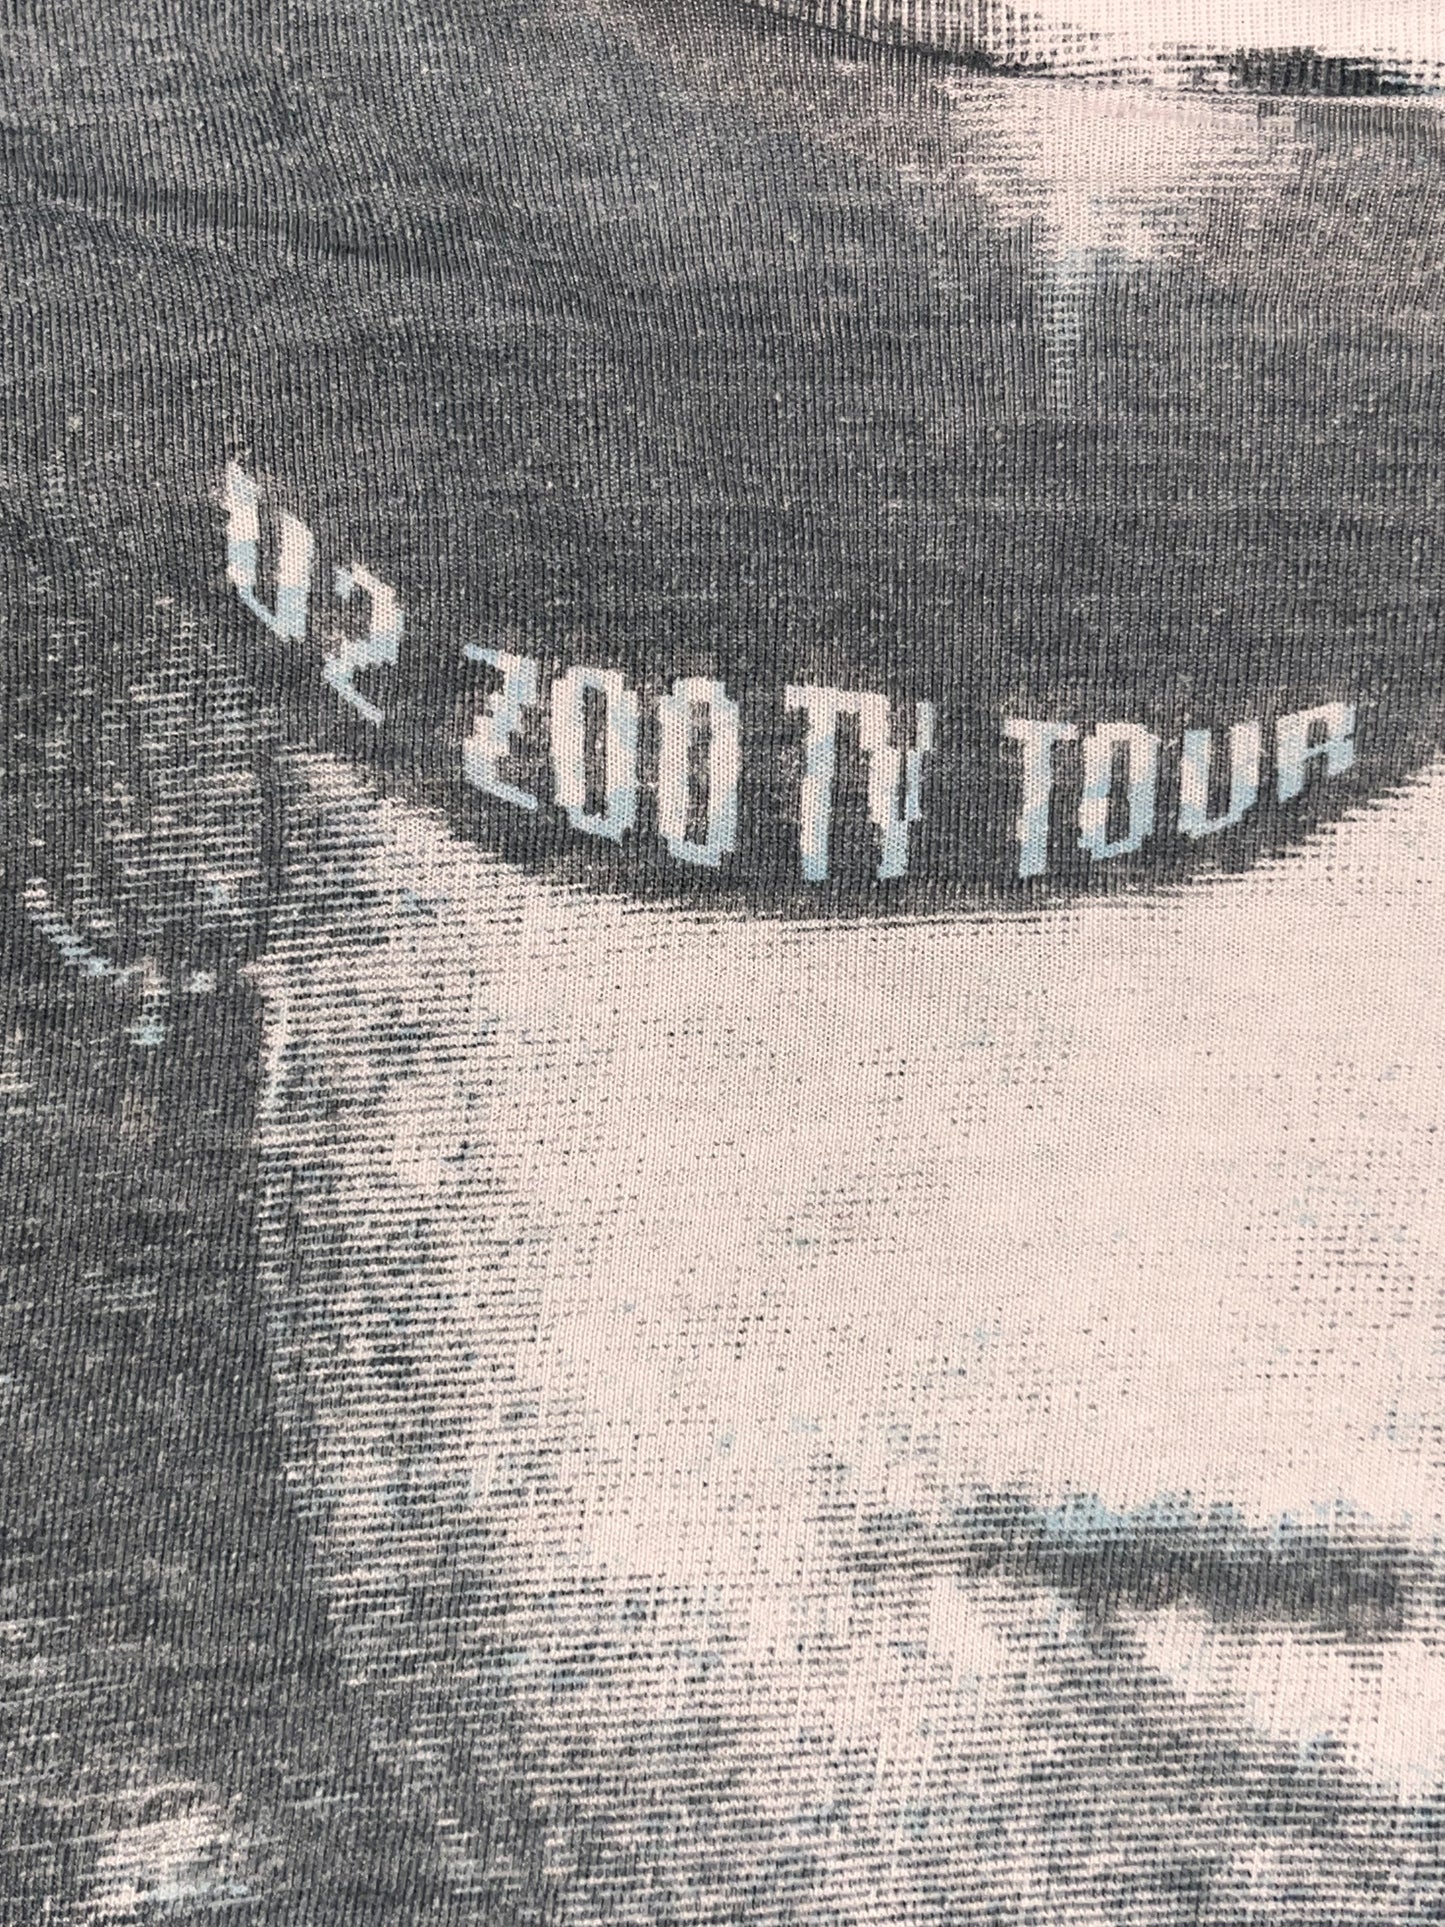 1993 U2 Zoo TV Mosquitohead T shirt